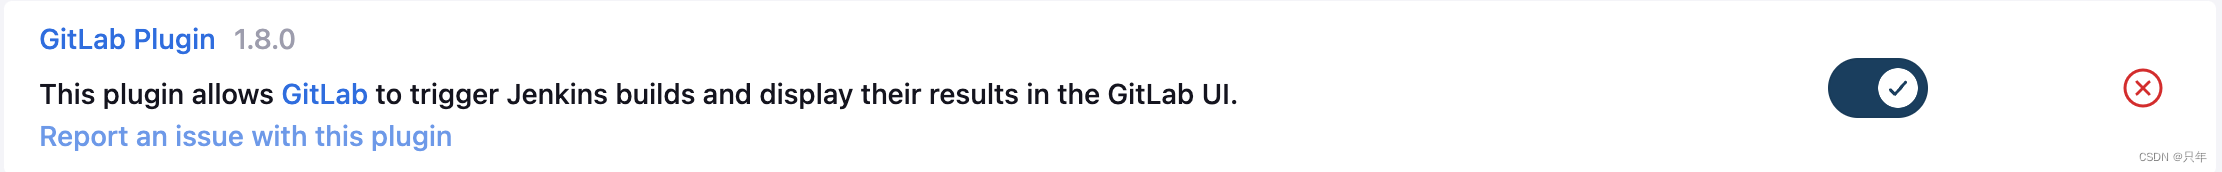 GitLab Plugin